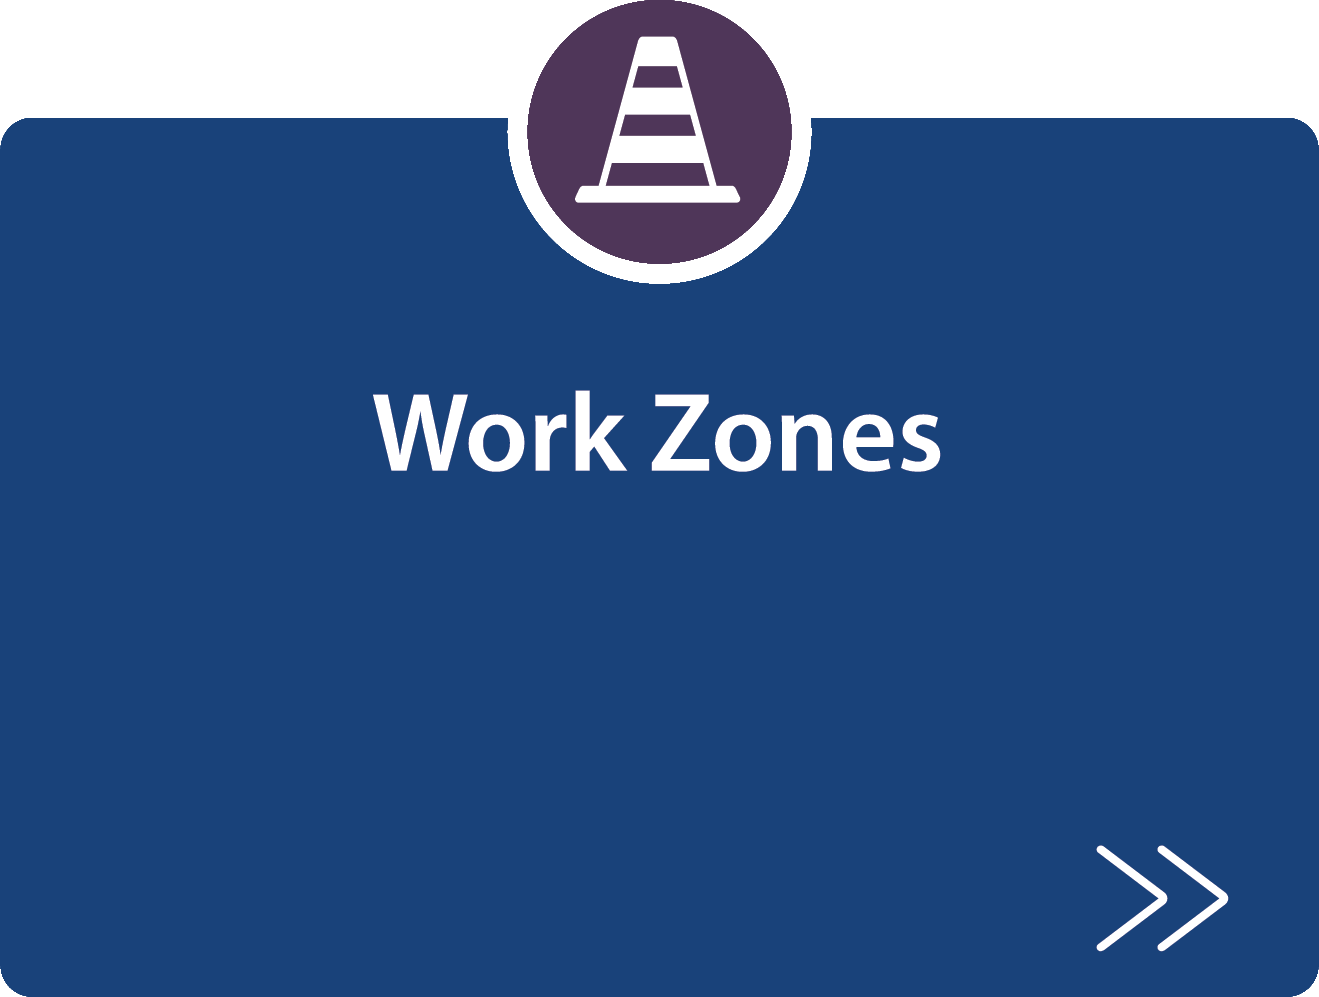 Work zones strategy description